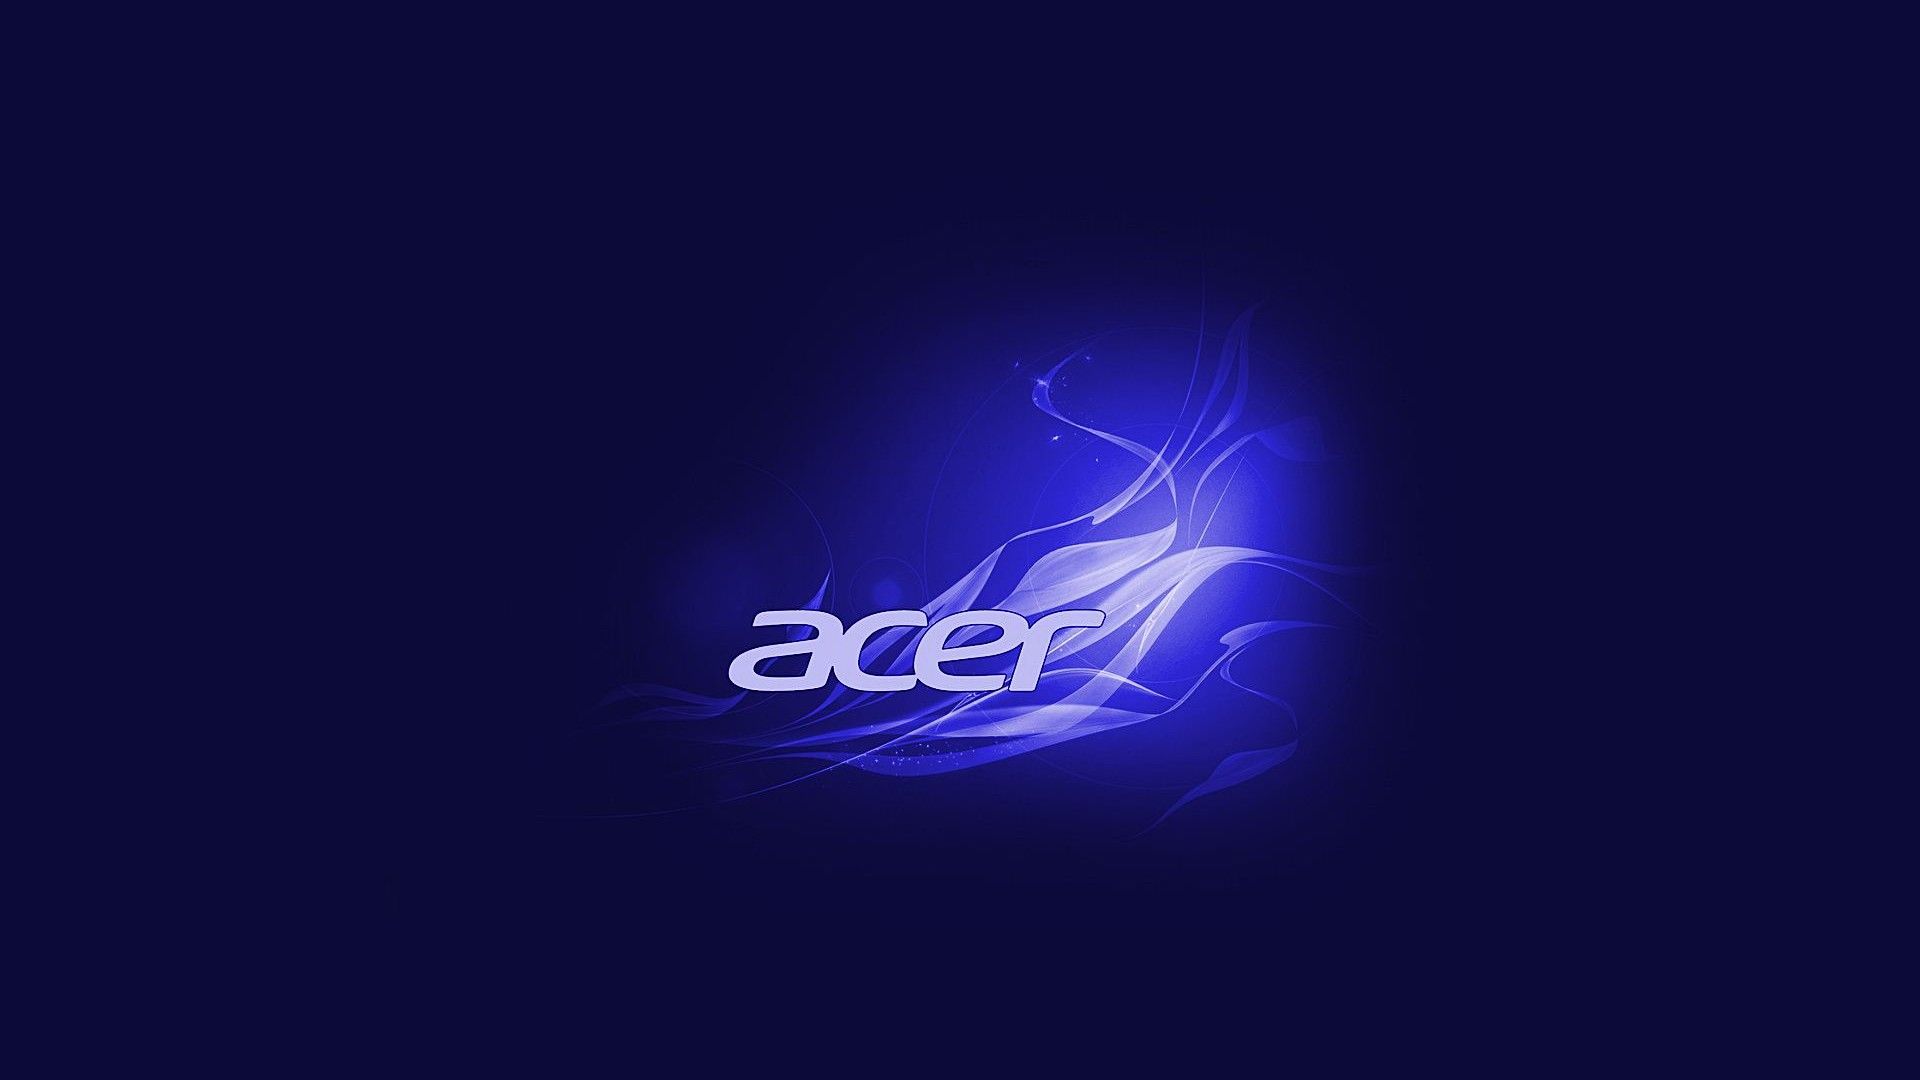 Acer blue logo wallpaper - Wallpaper - Wallpaper Style